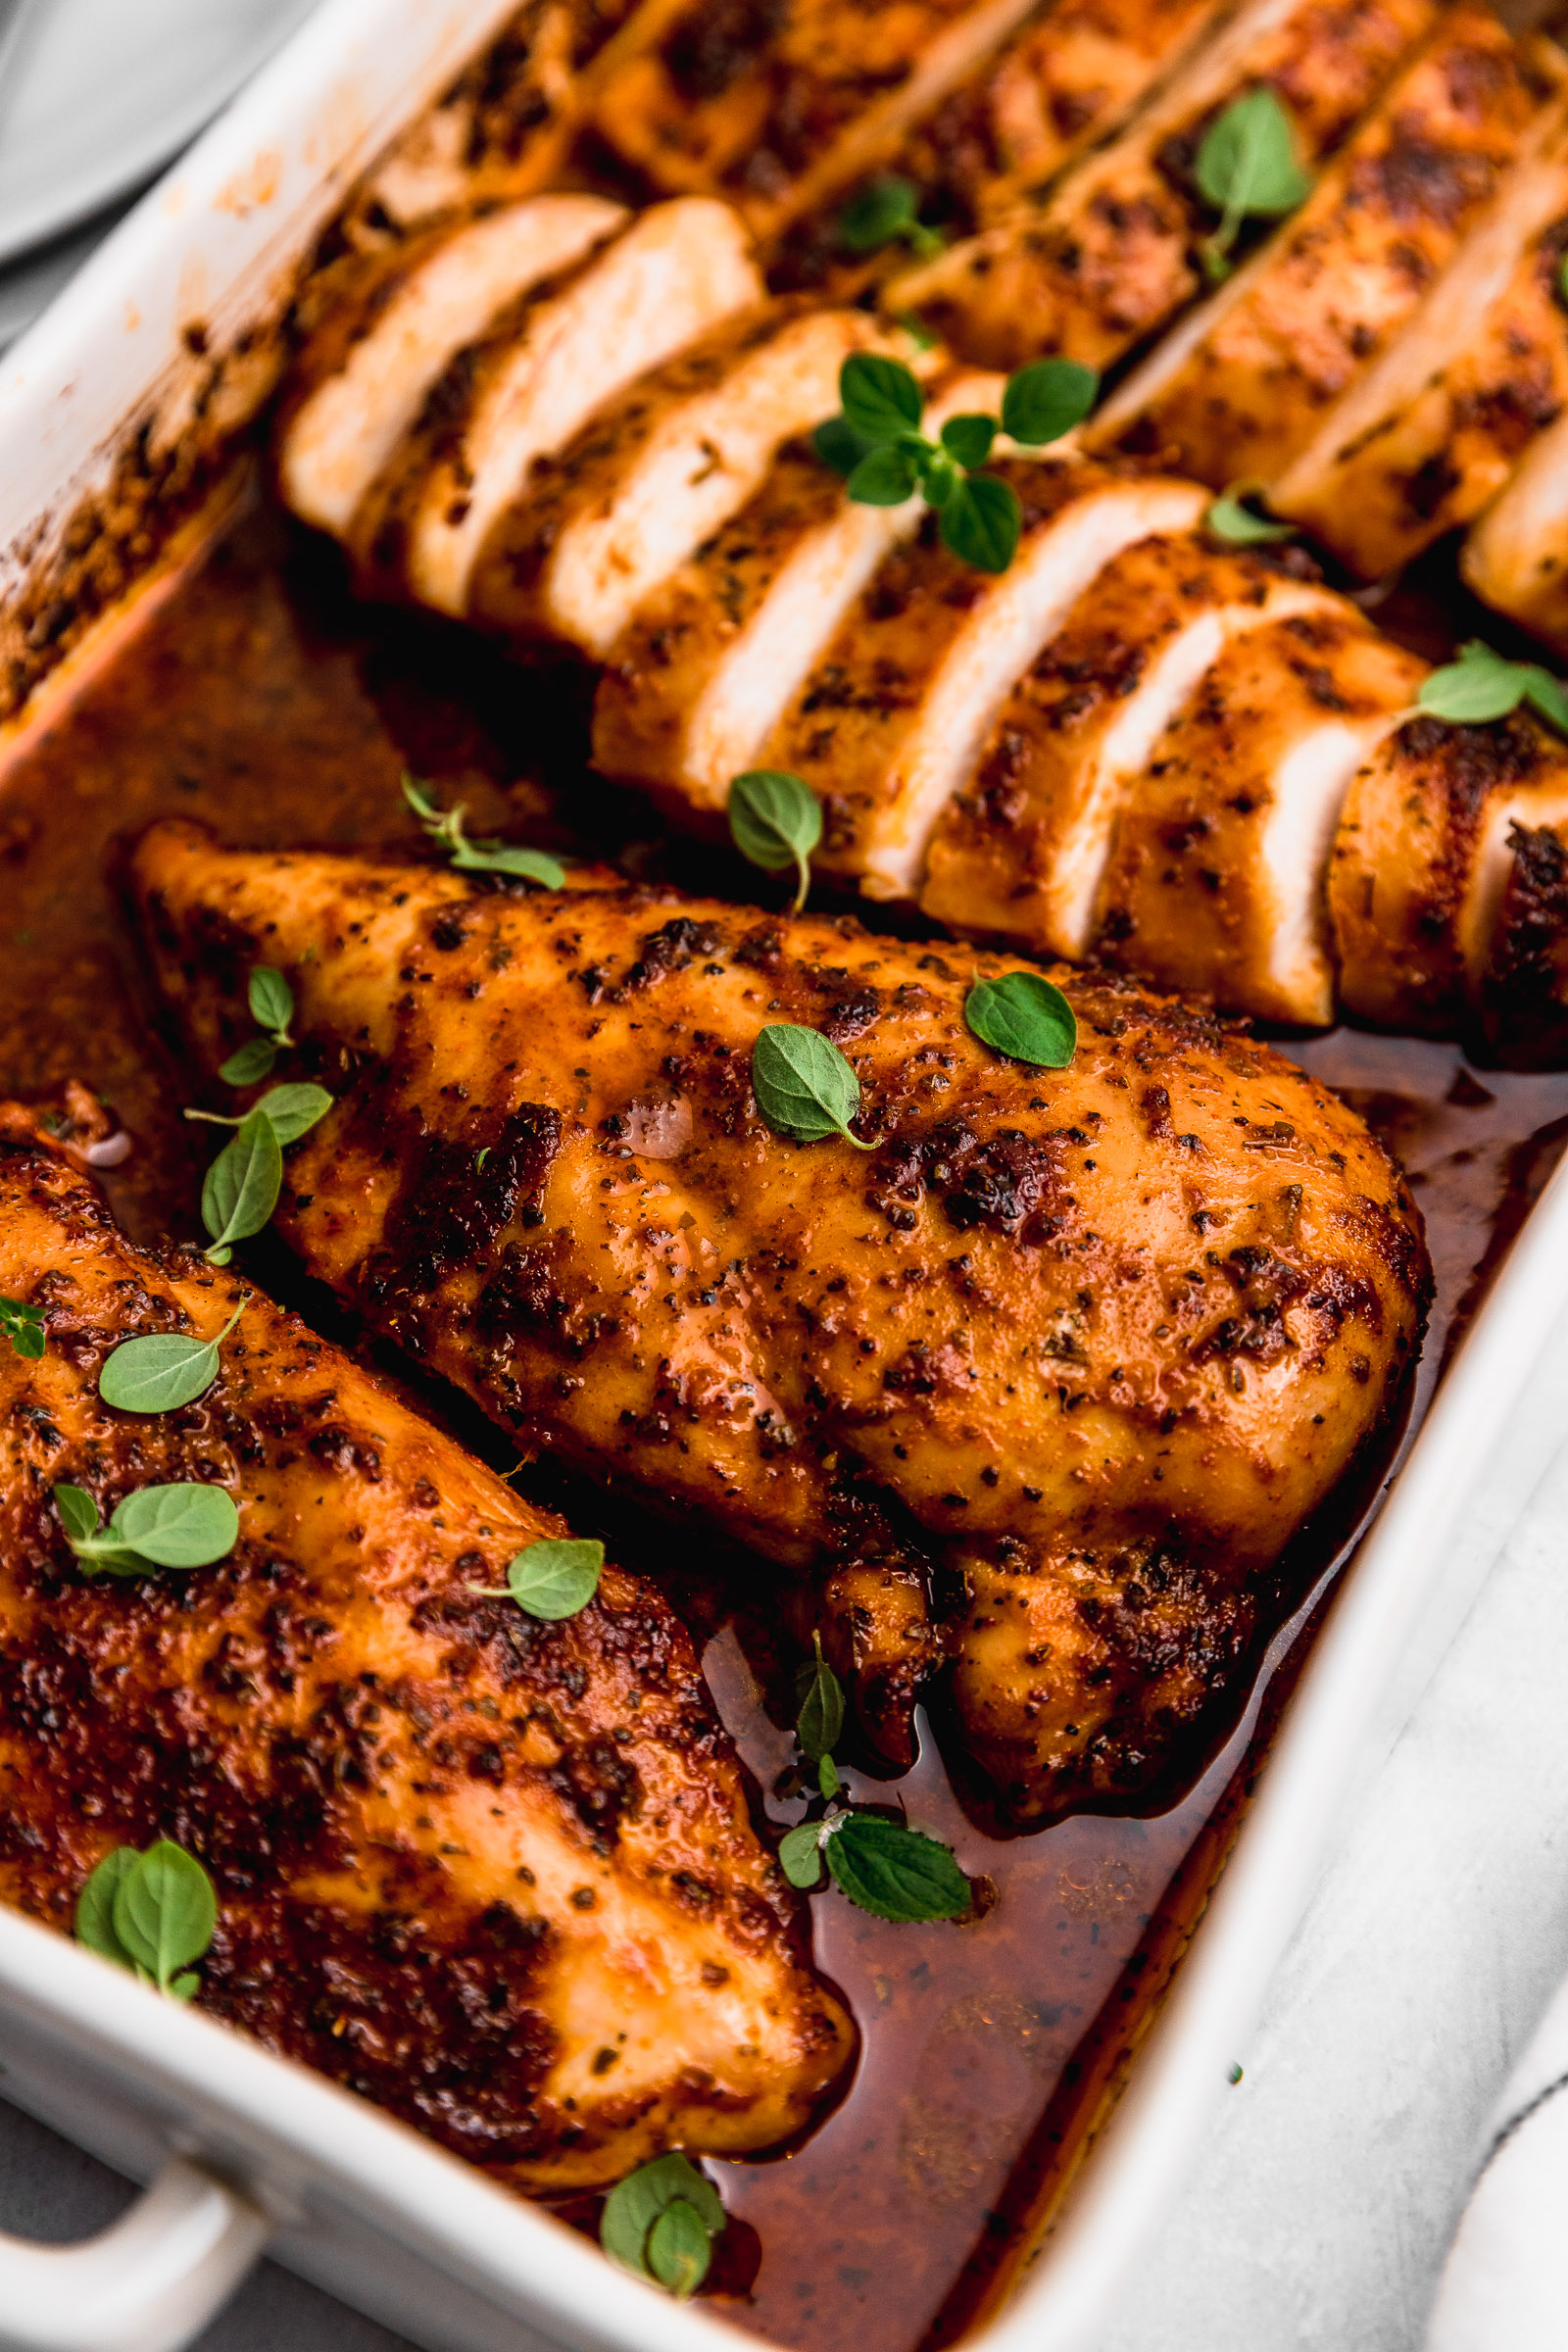 Juicy oven-baked chicken breasts